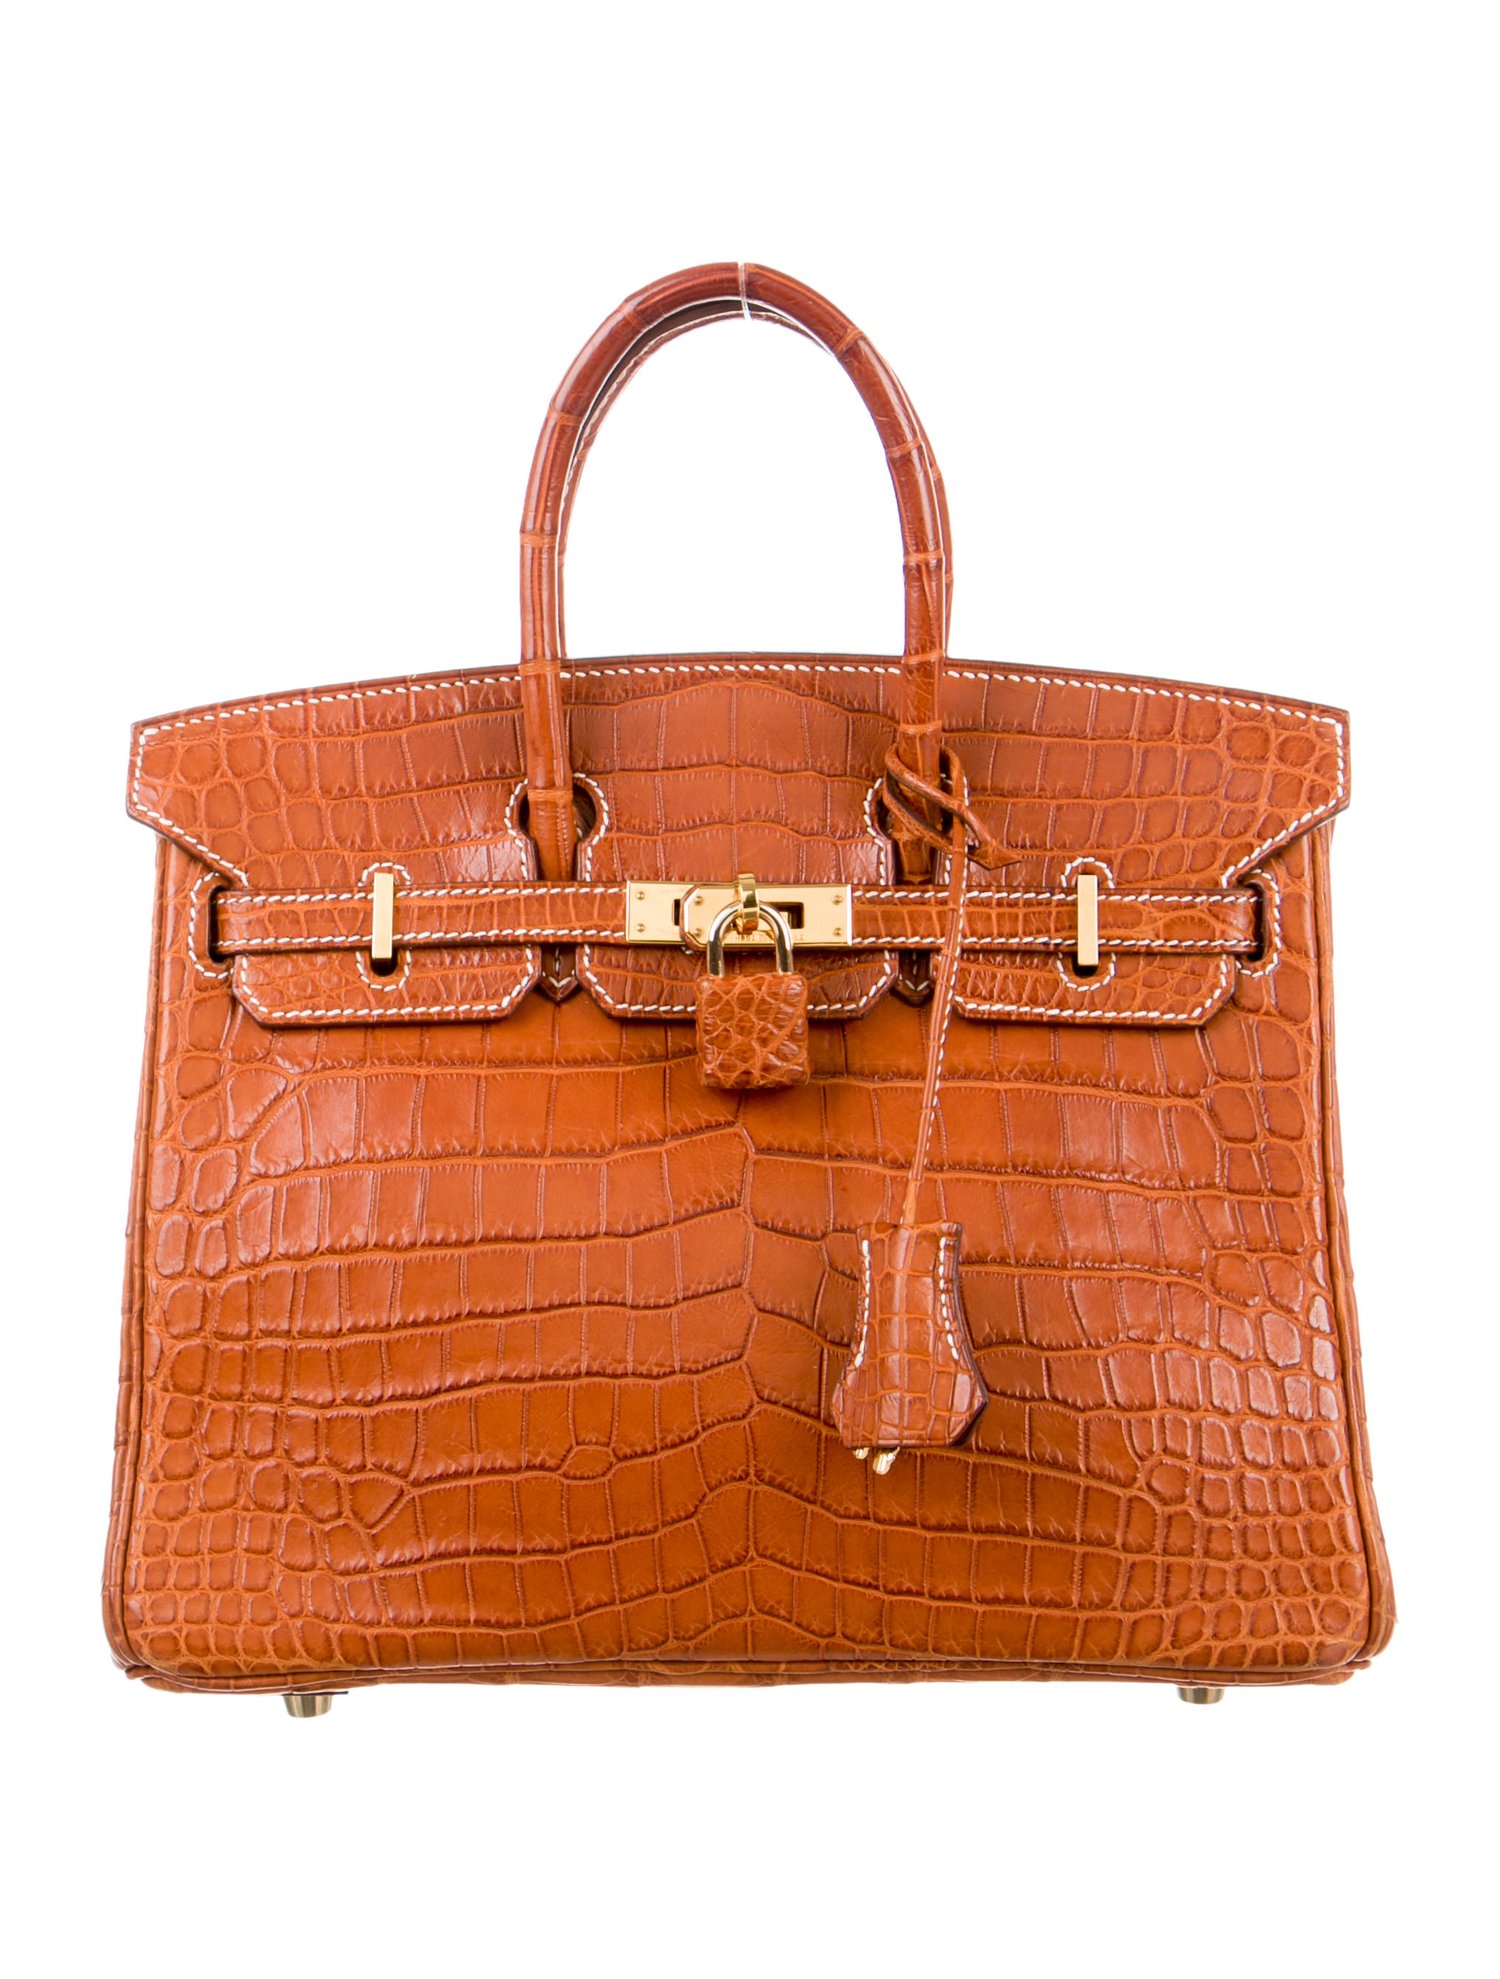 Most Expensive Birkin Handbag | Paul Smith